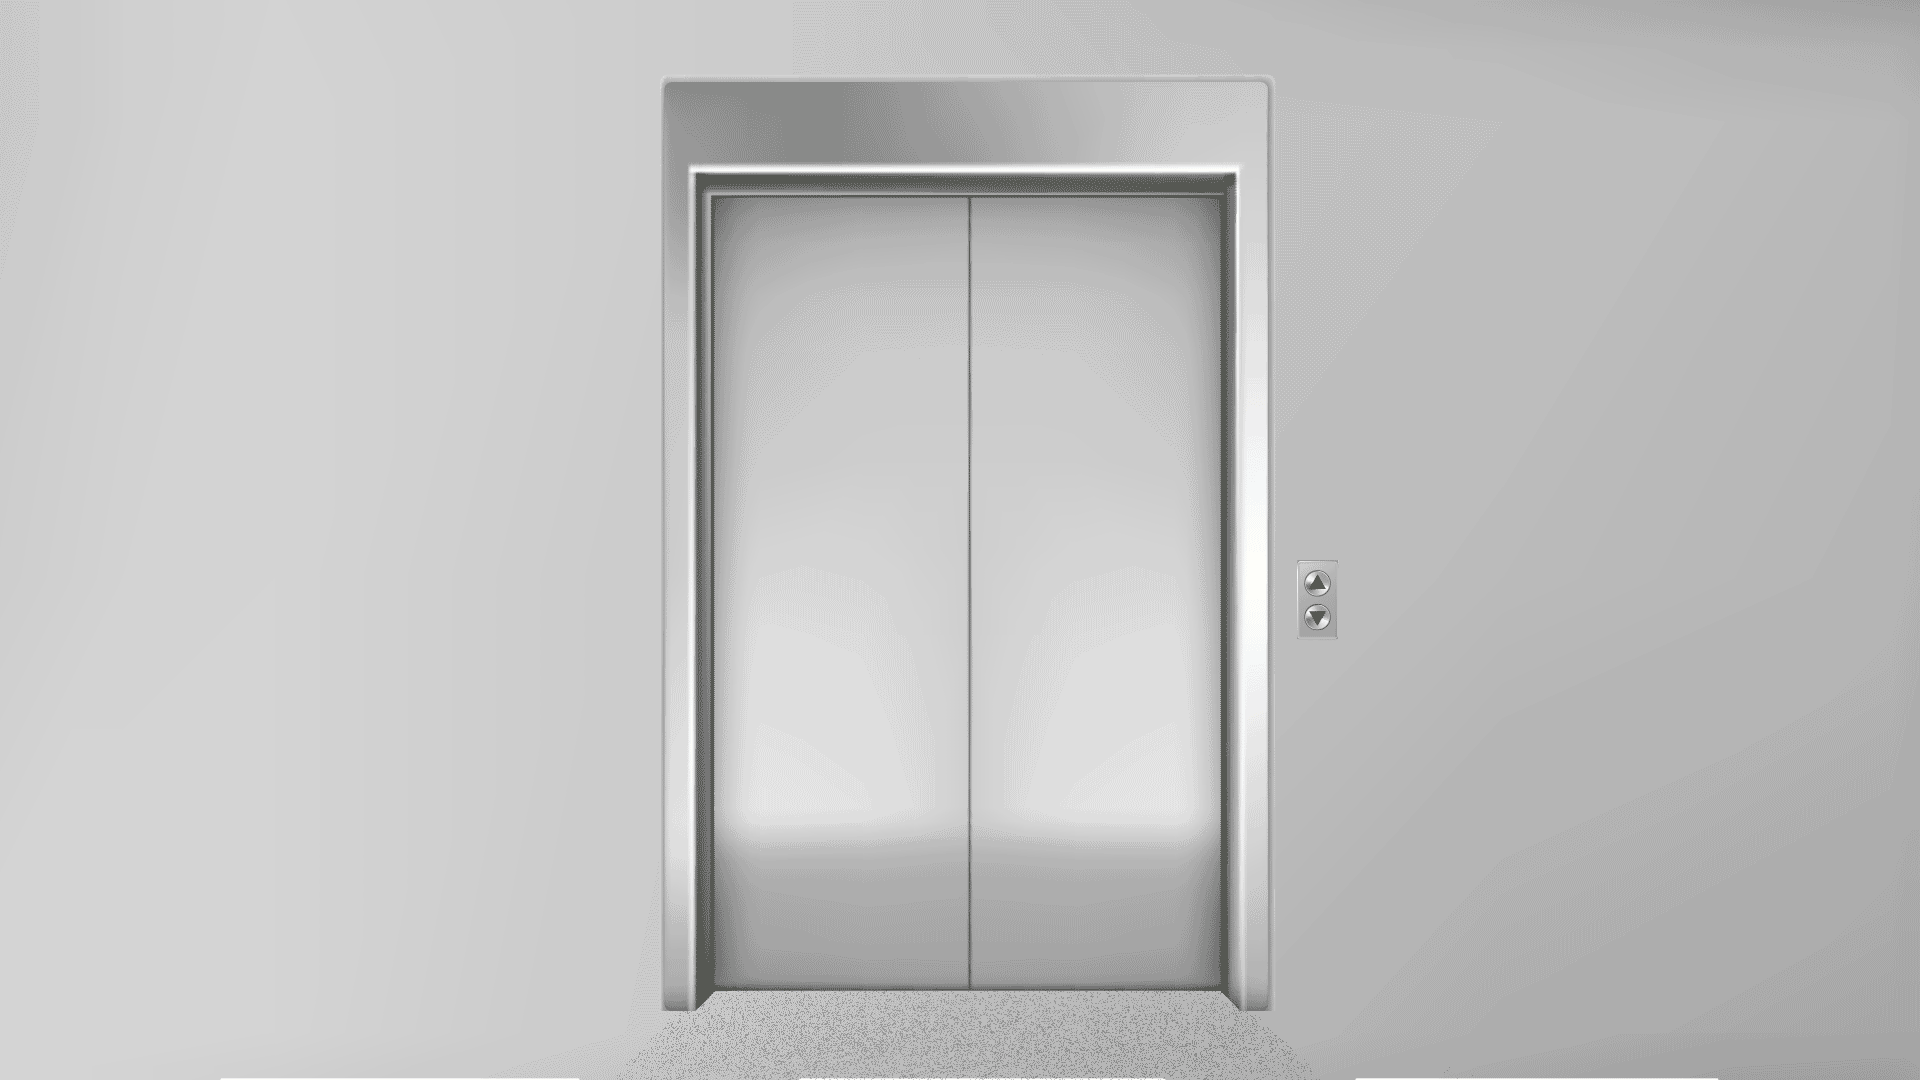 Animated Whimsical Monochrome Illustration of Door Opening GIF